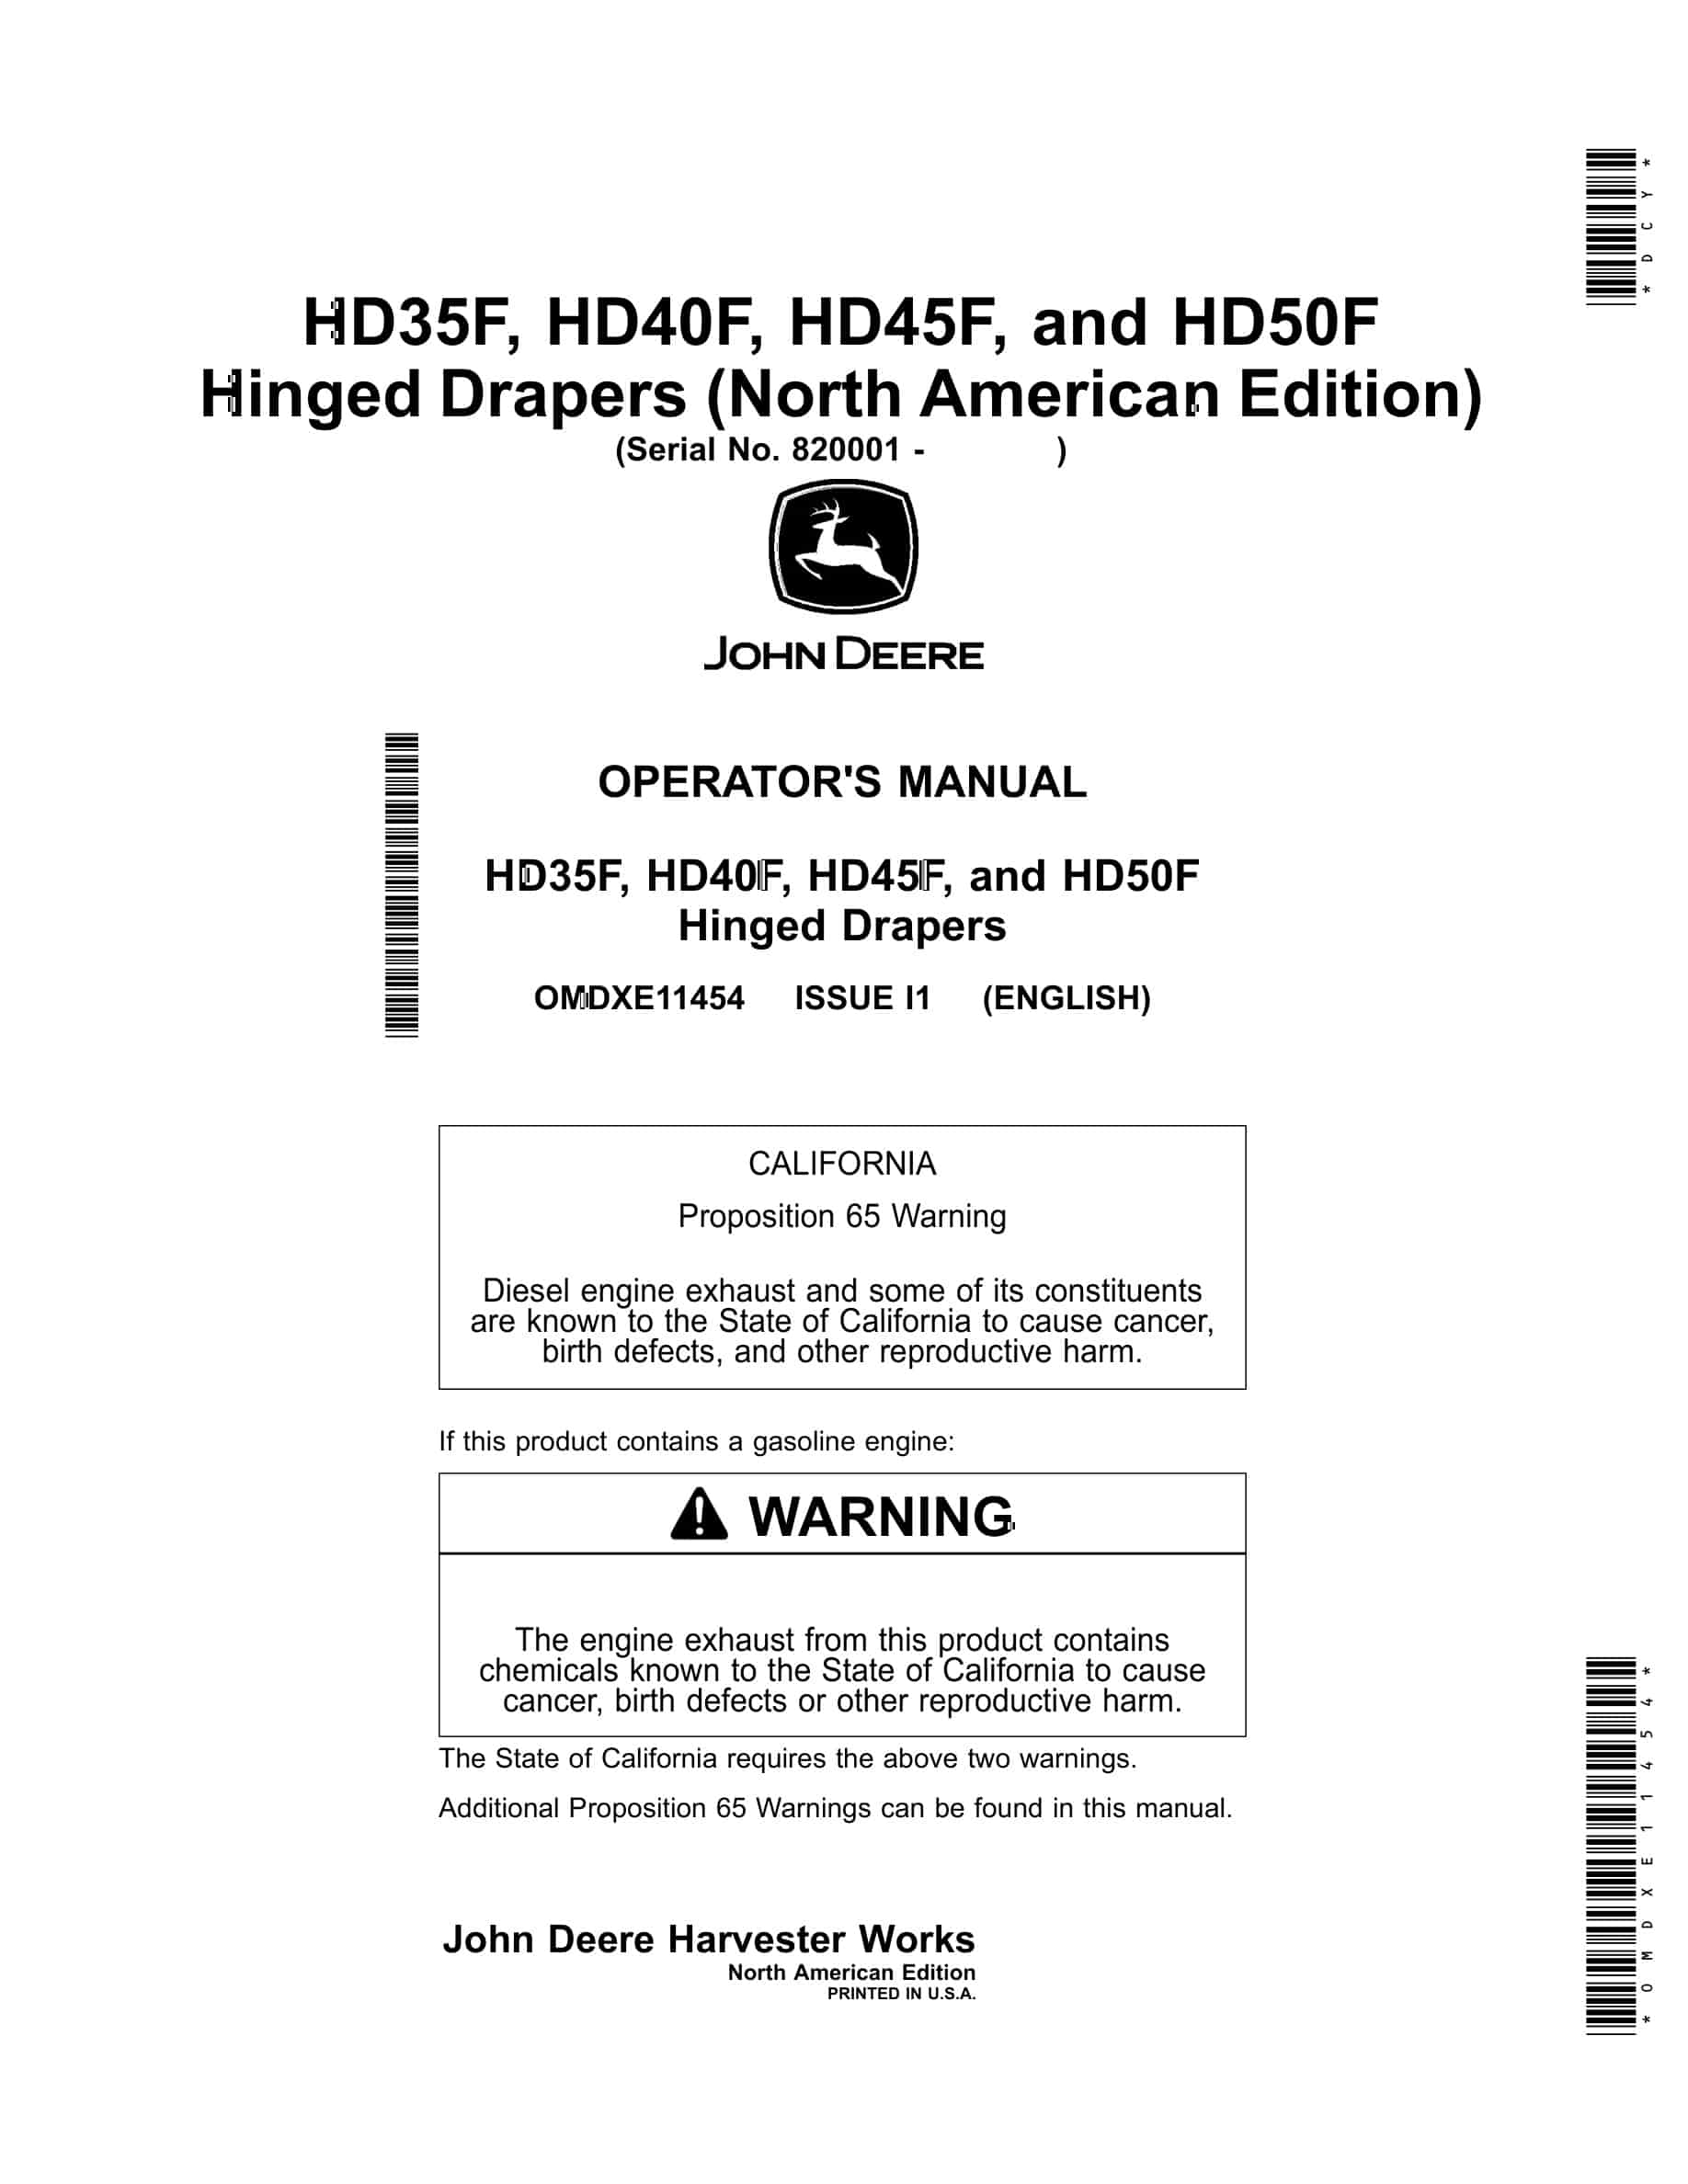 John Deere HD35F, HD40F, HD45F, and HD50F Hinged Drapers Operator Manual OMDXE11454-1